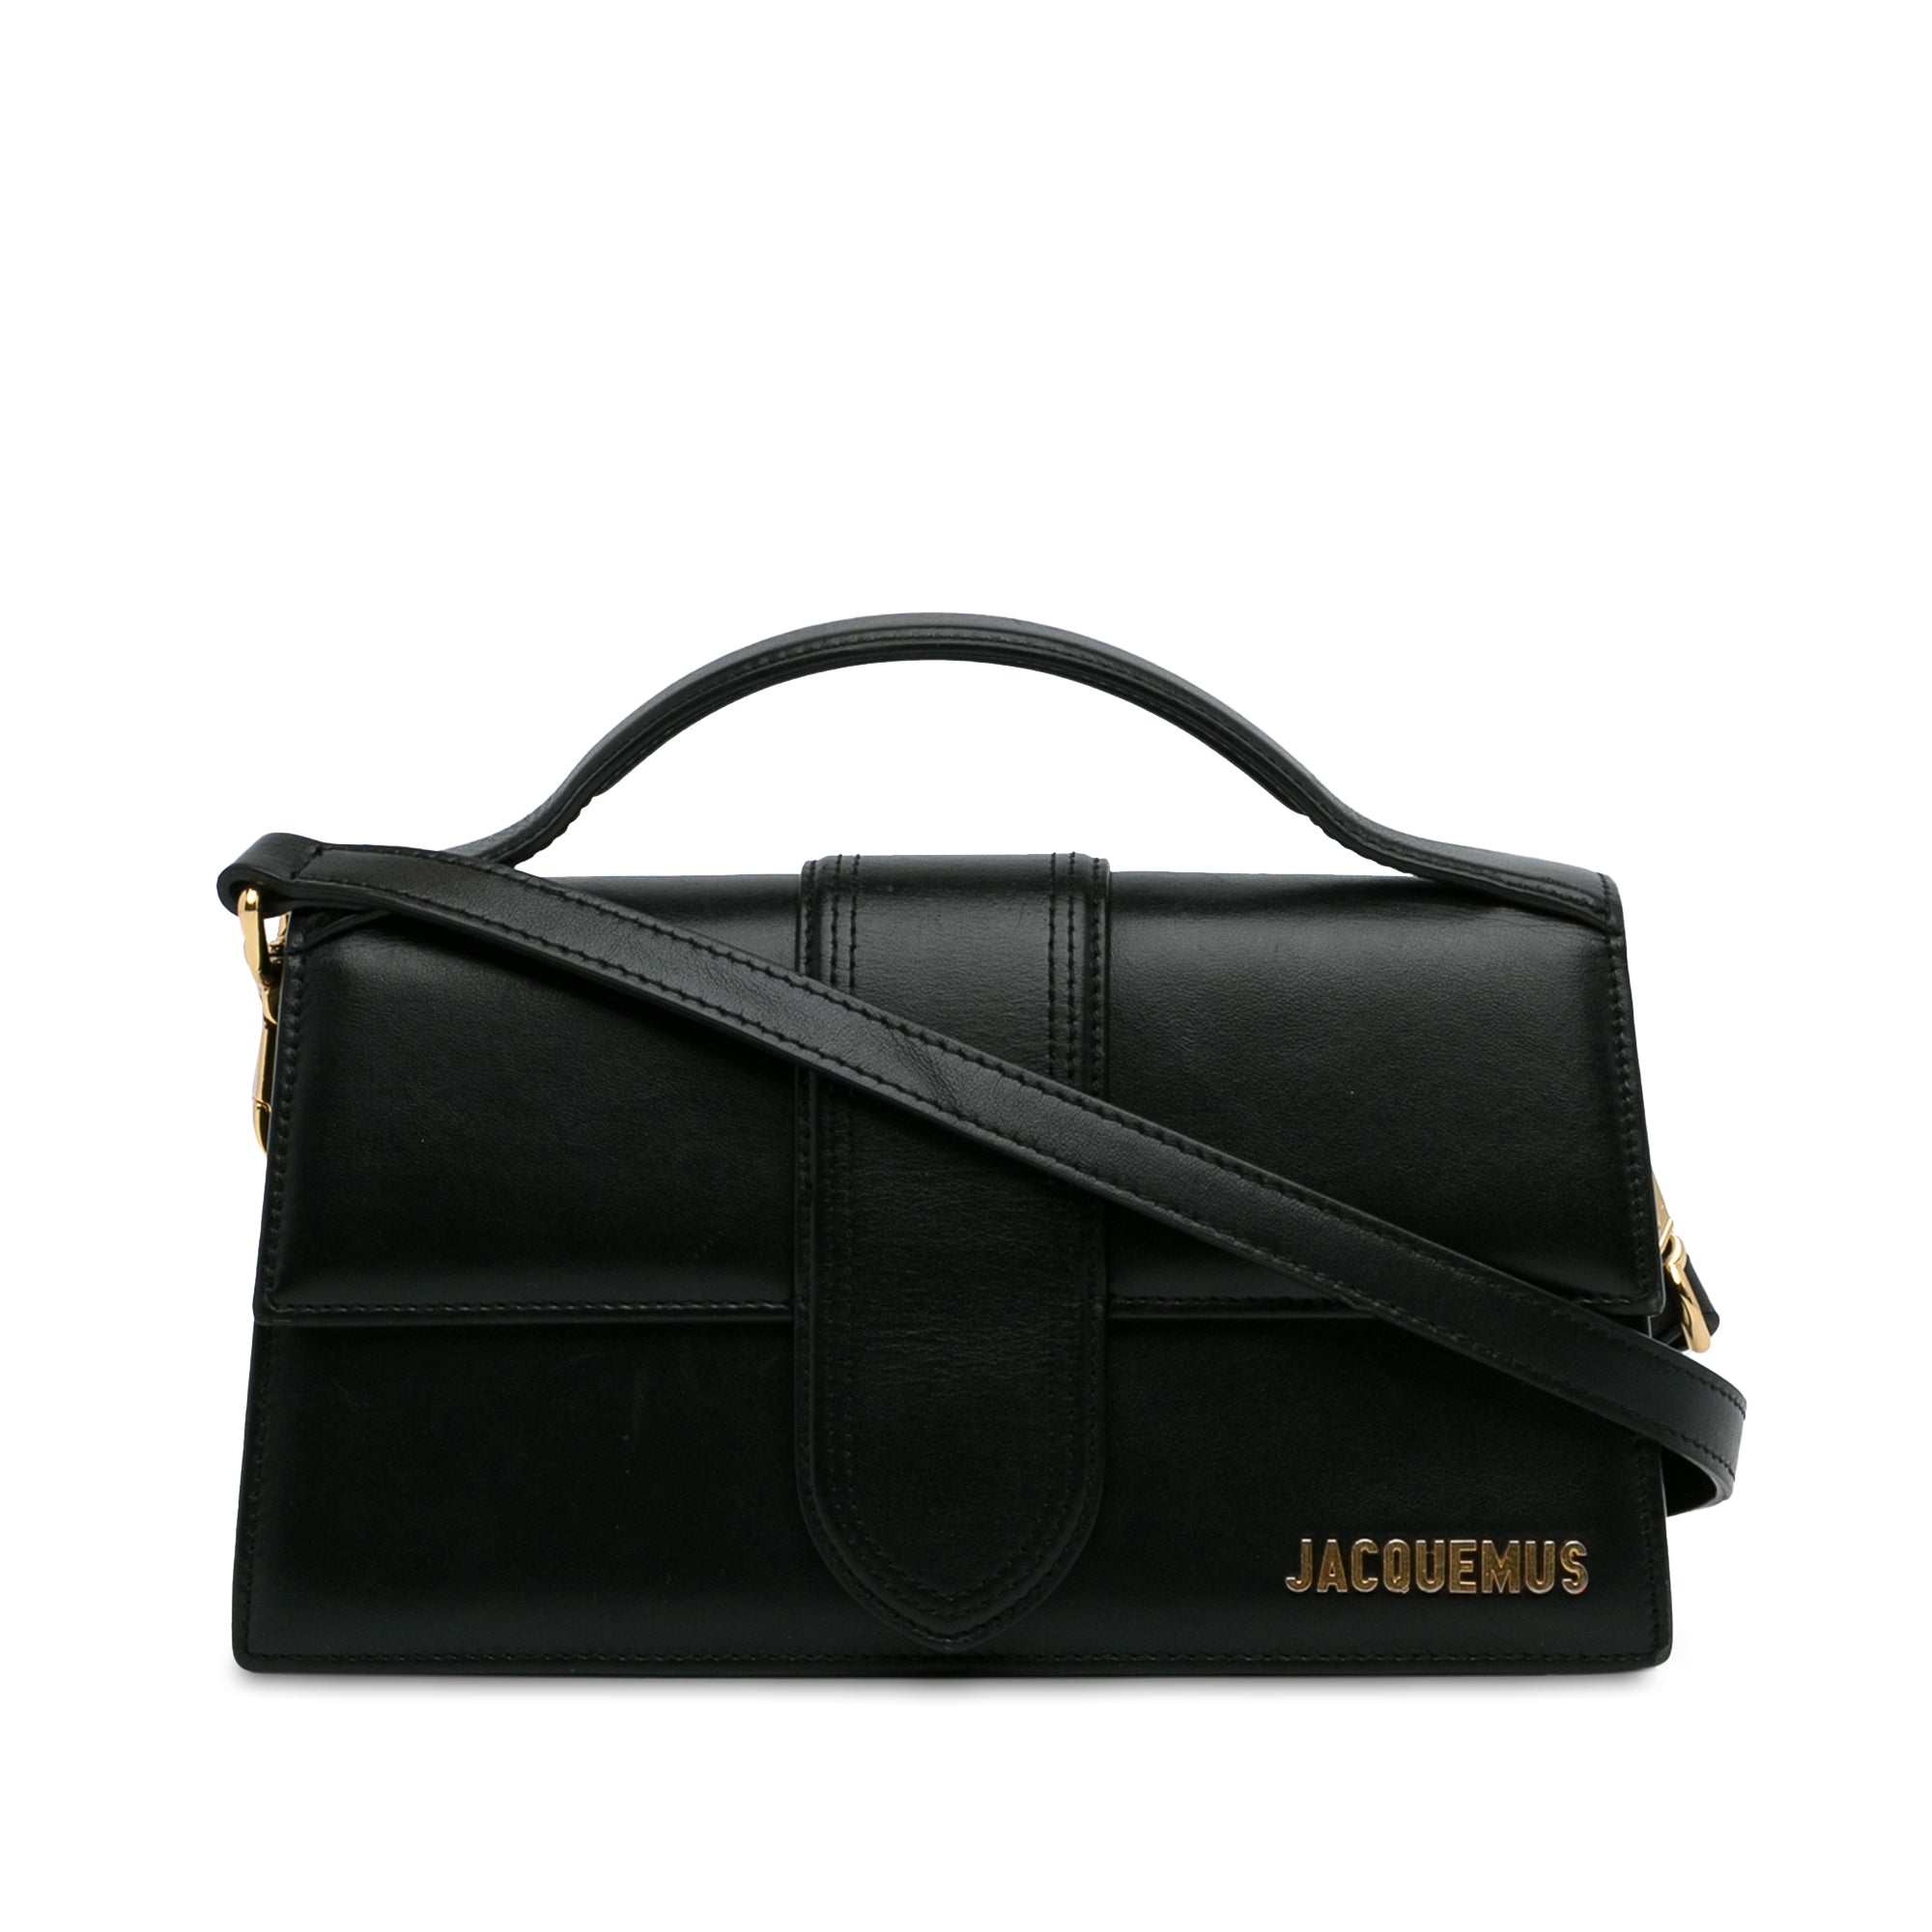 Jacquemus Bambino Le Grand Black Leather